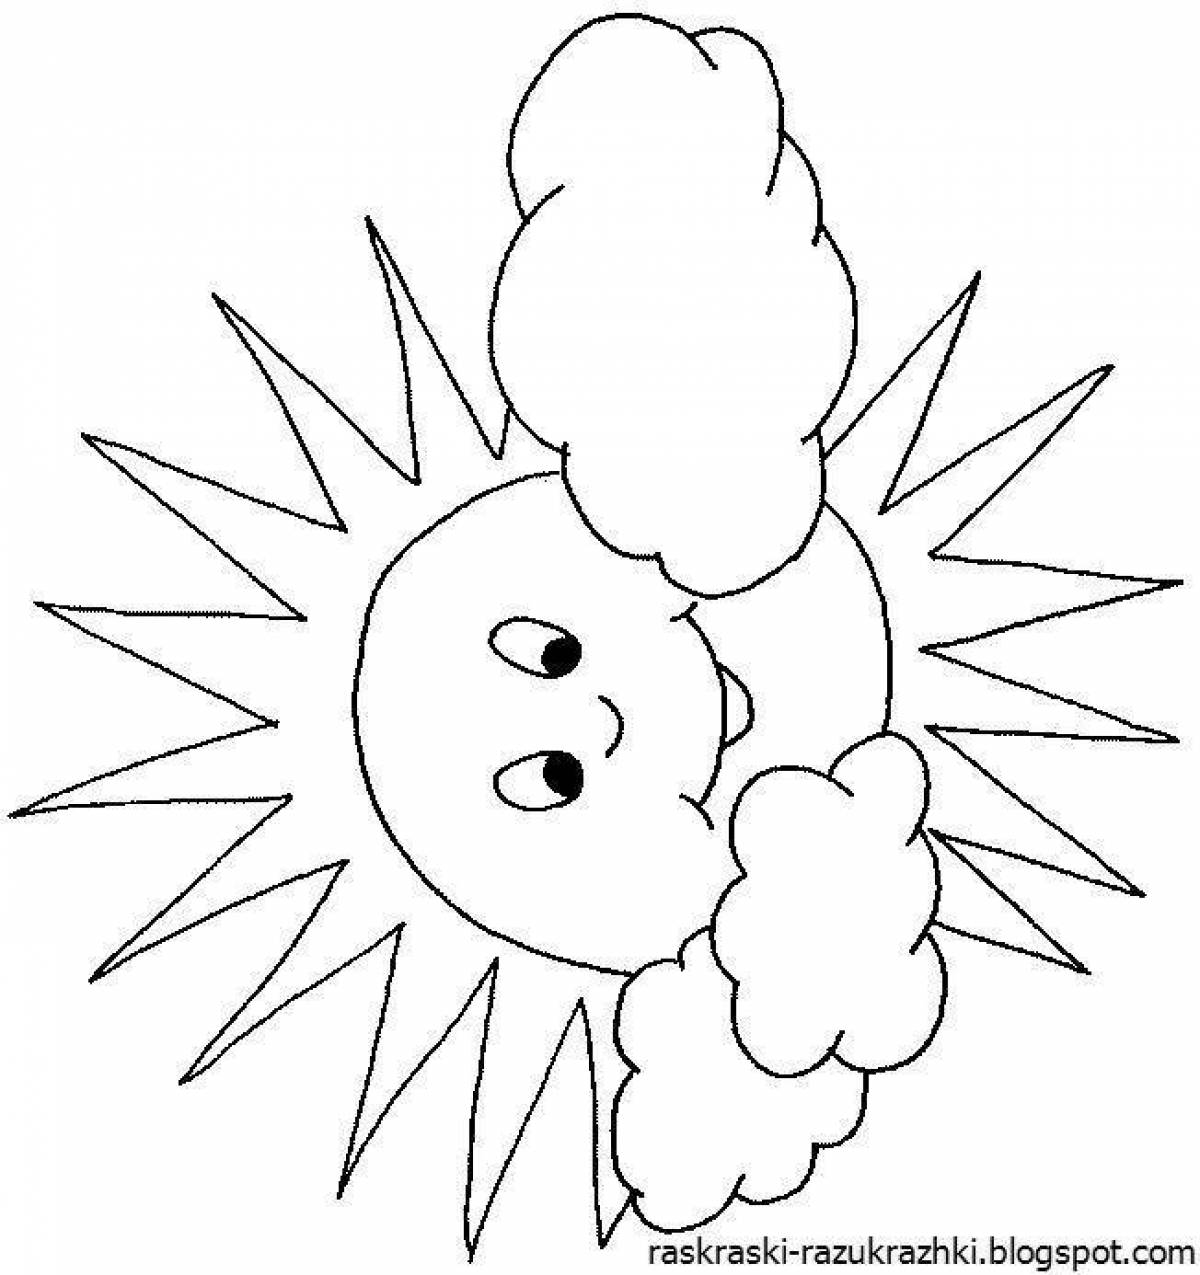 Креативная раскраска солнце для детей 2-3 лет